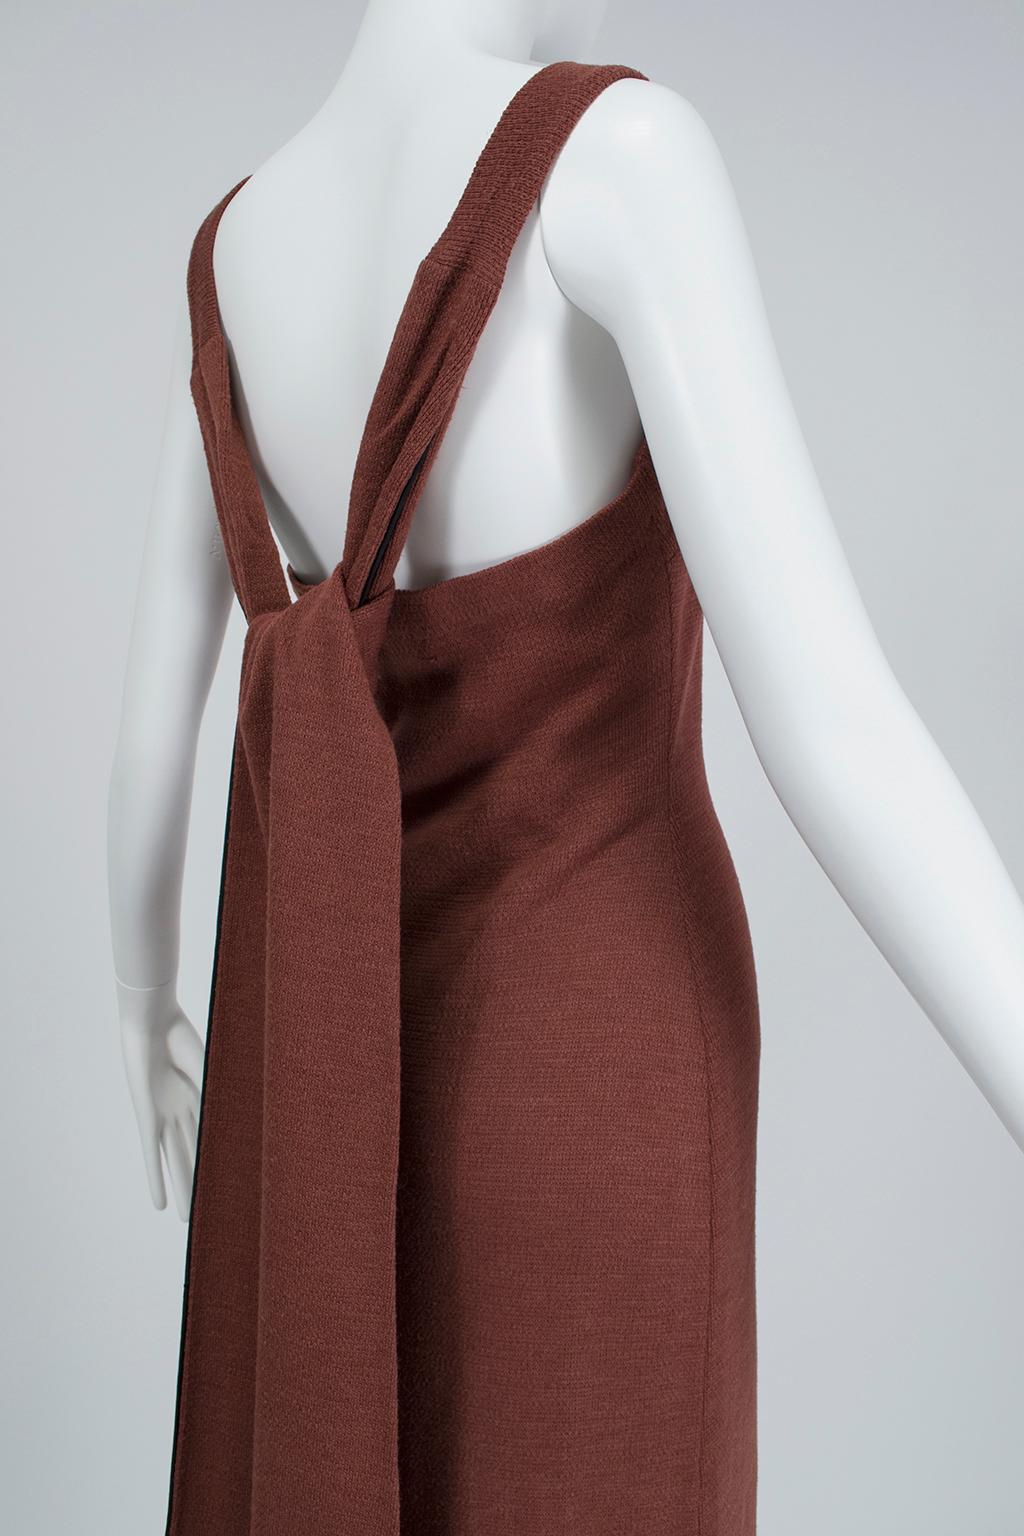 Rudi Gernreich Chestnut Knit Halter Tube Dress with 4’ Sashes - size M, 1960s 2